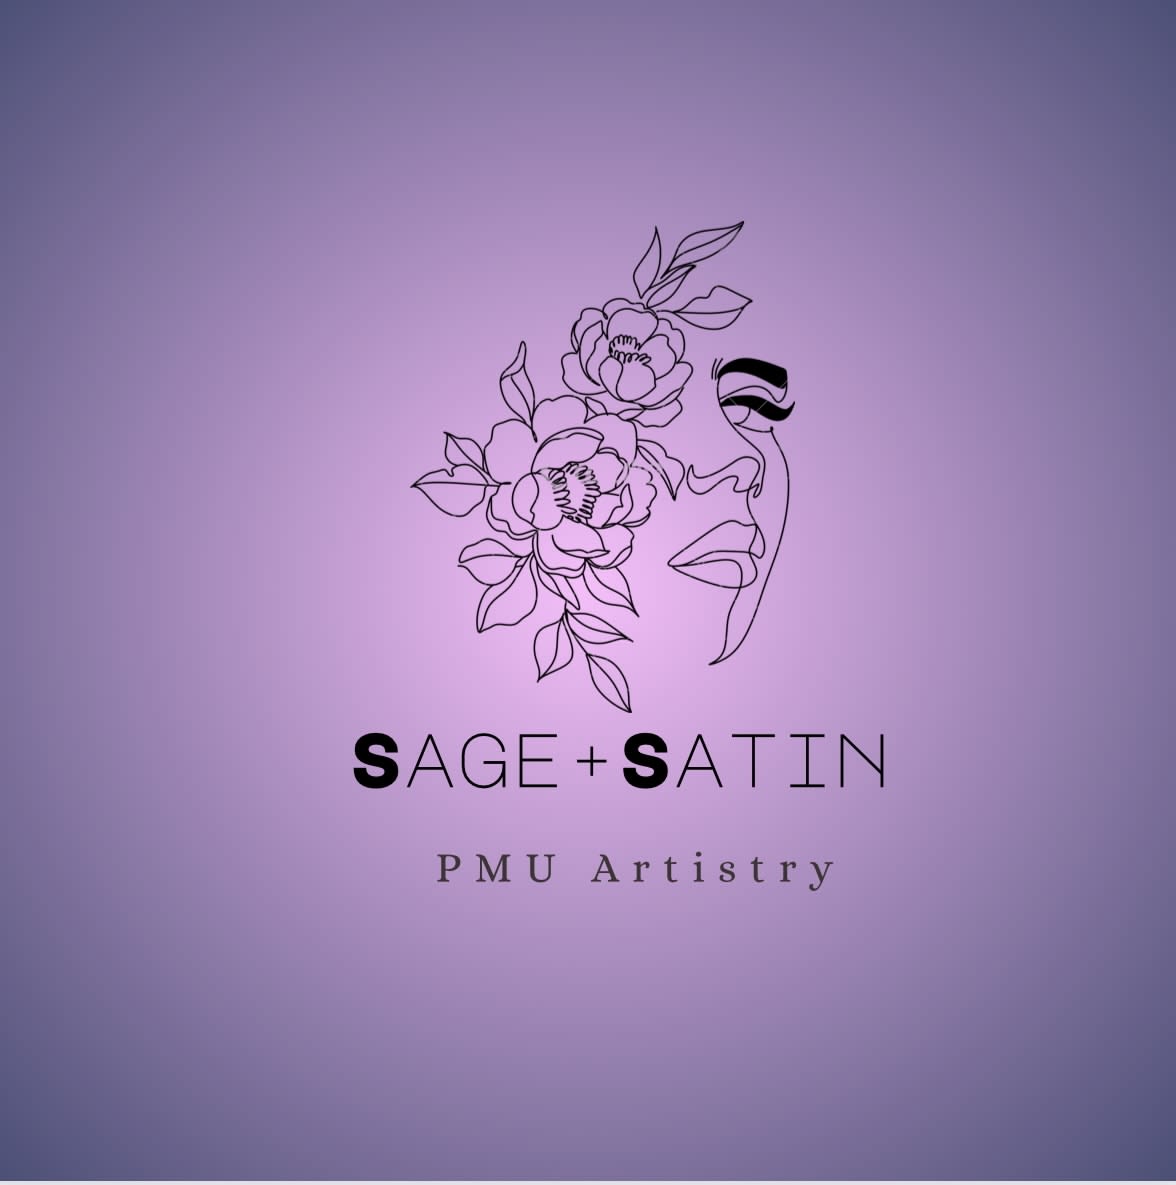 Sage & Satin PMU Artistry